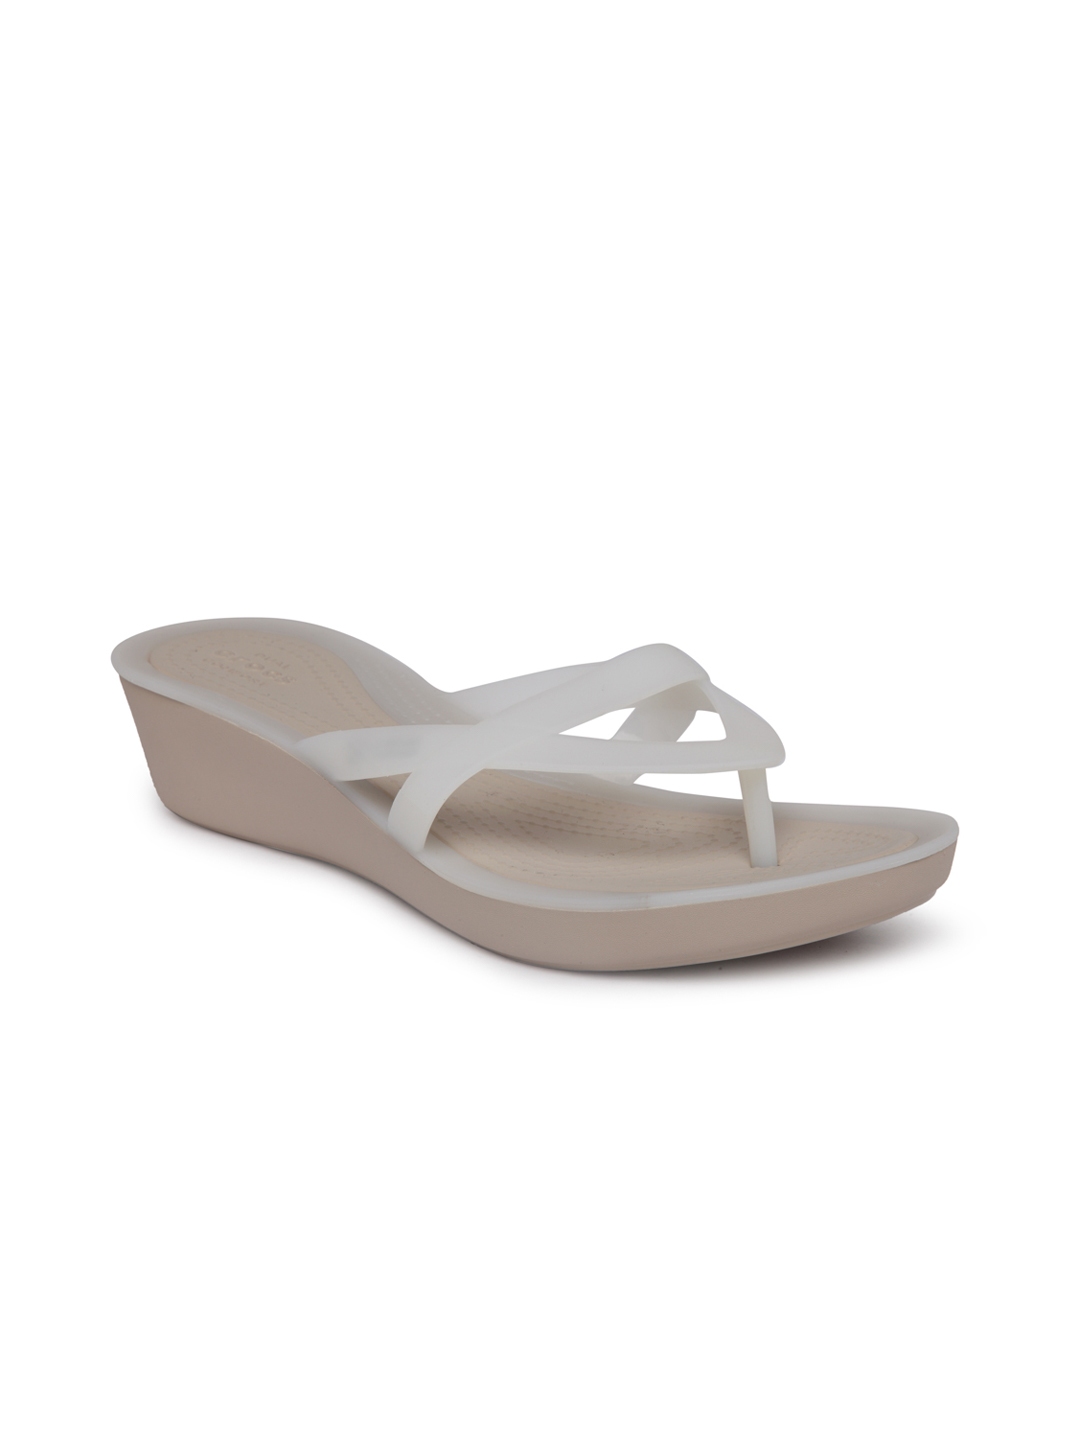 Buy Crocs Isabella Women Off White Colourblocked Slip On Sandals - Flip  Flops for Women 2371444 | Myntra